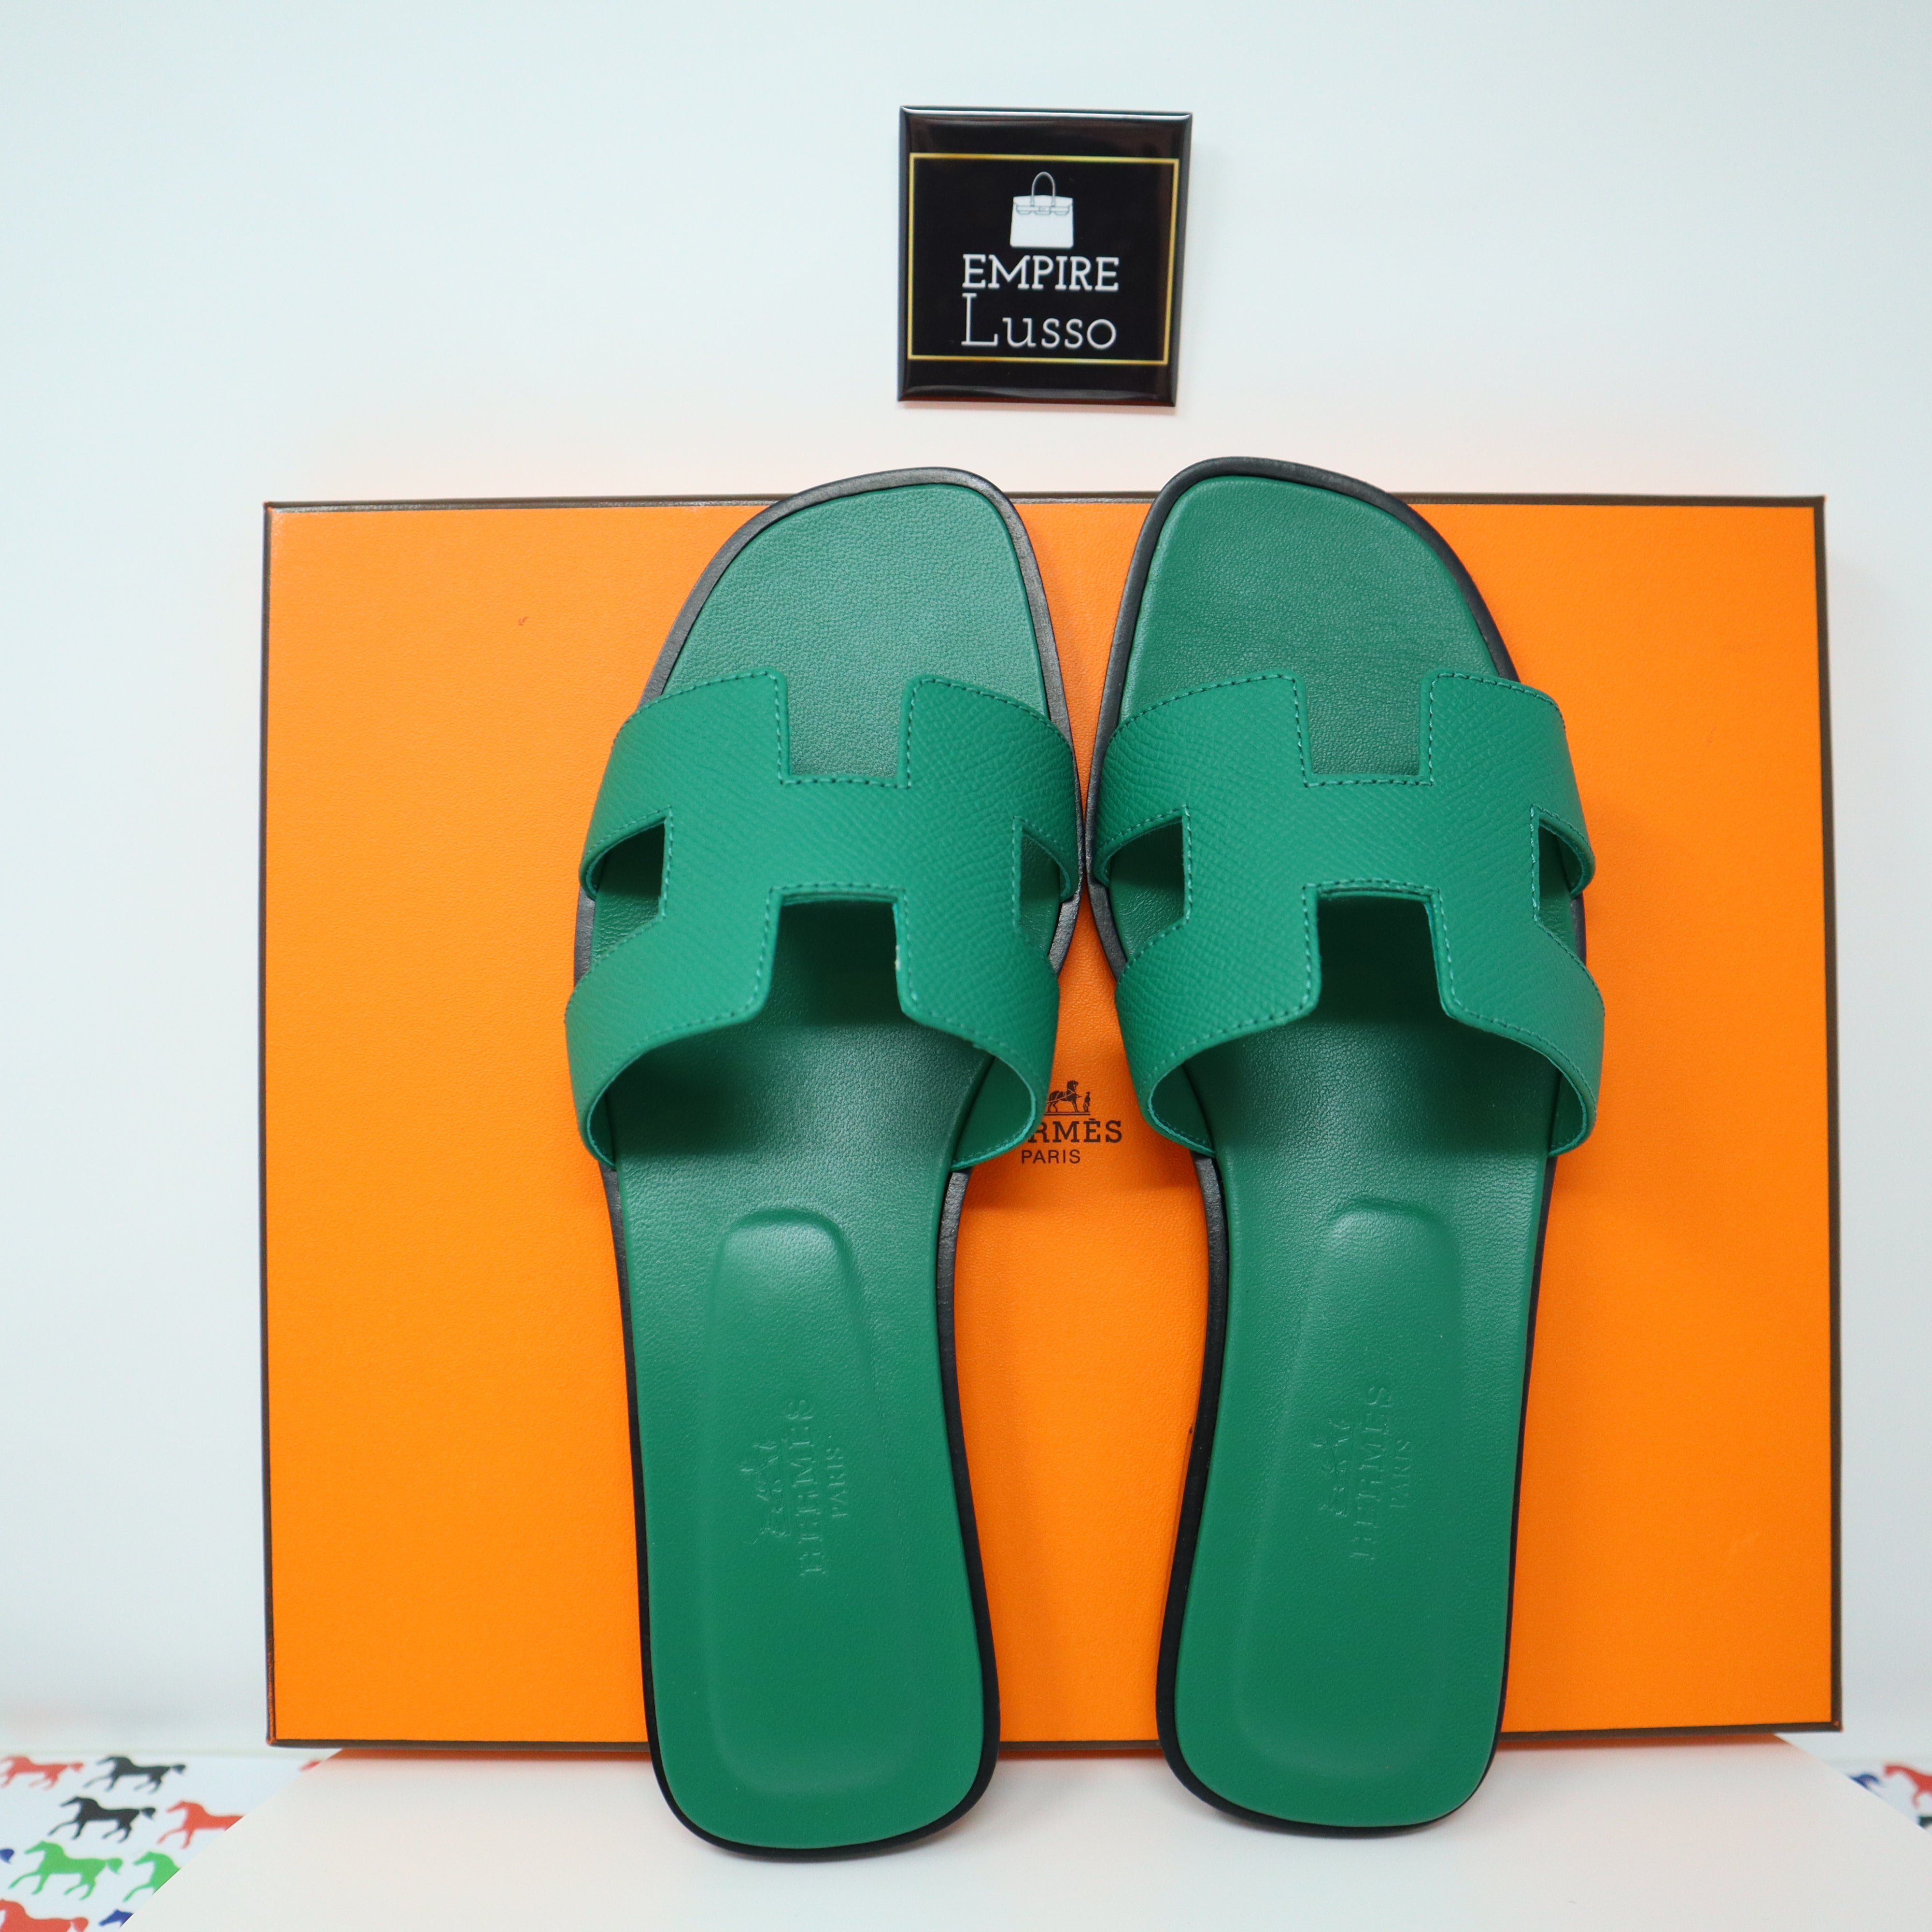 Hermes Oran Sandals Flat, Green Vert Jade, Size 37.5, New in Box WA001